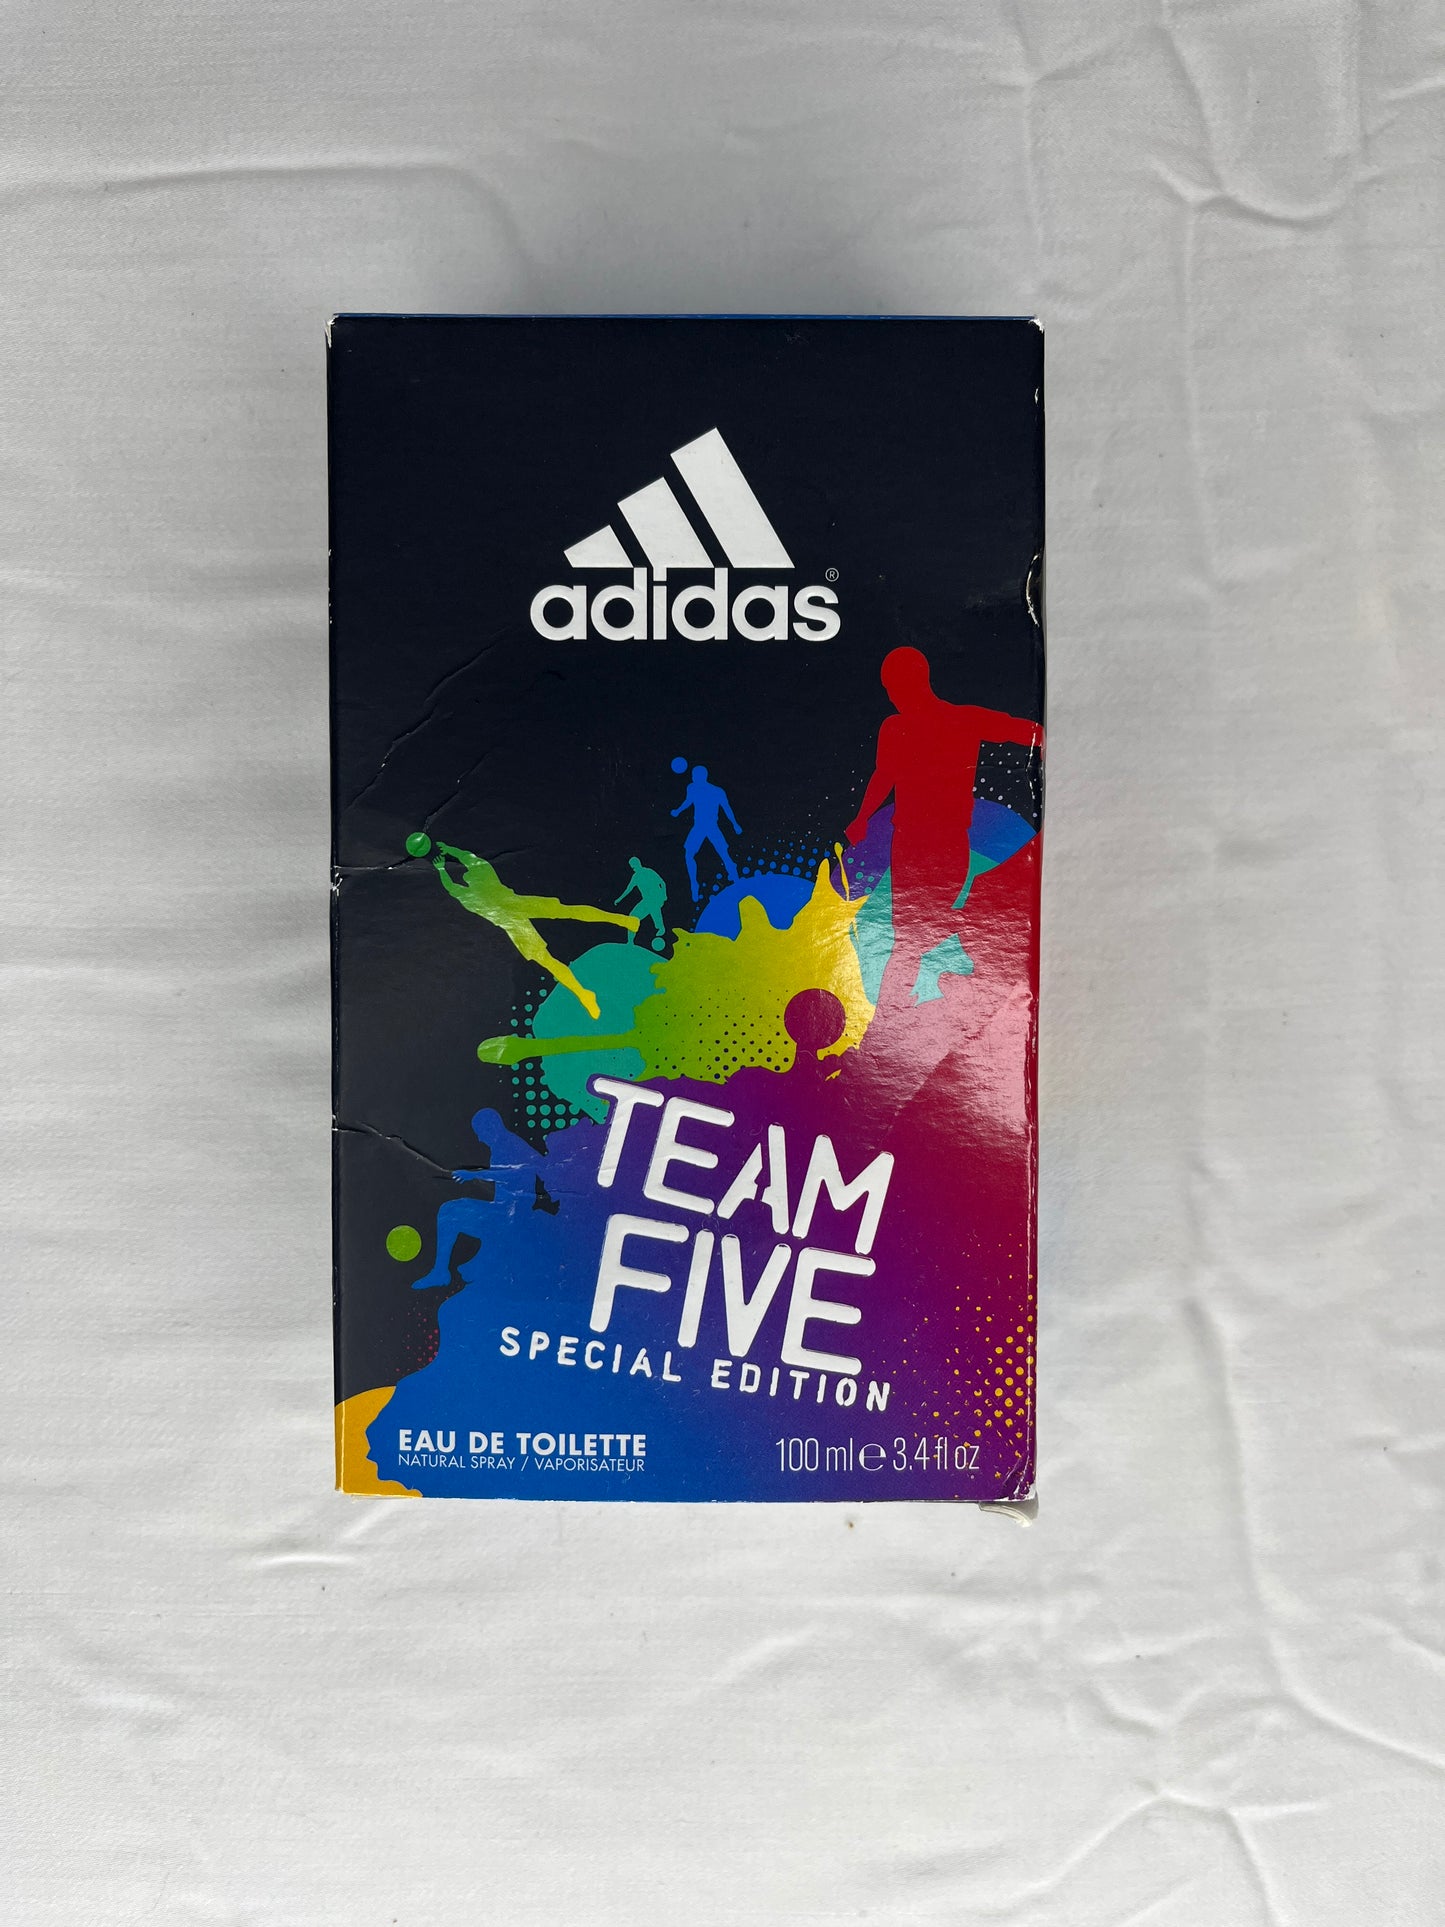 Adidas Team Five Fragrance SKU 000451